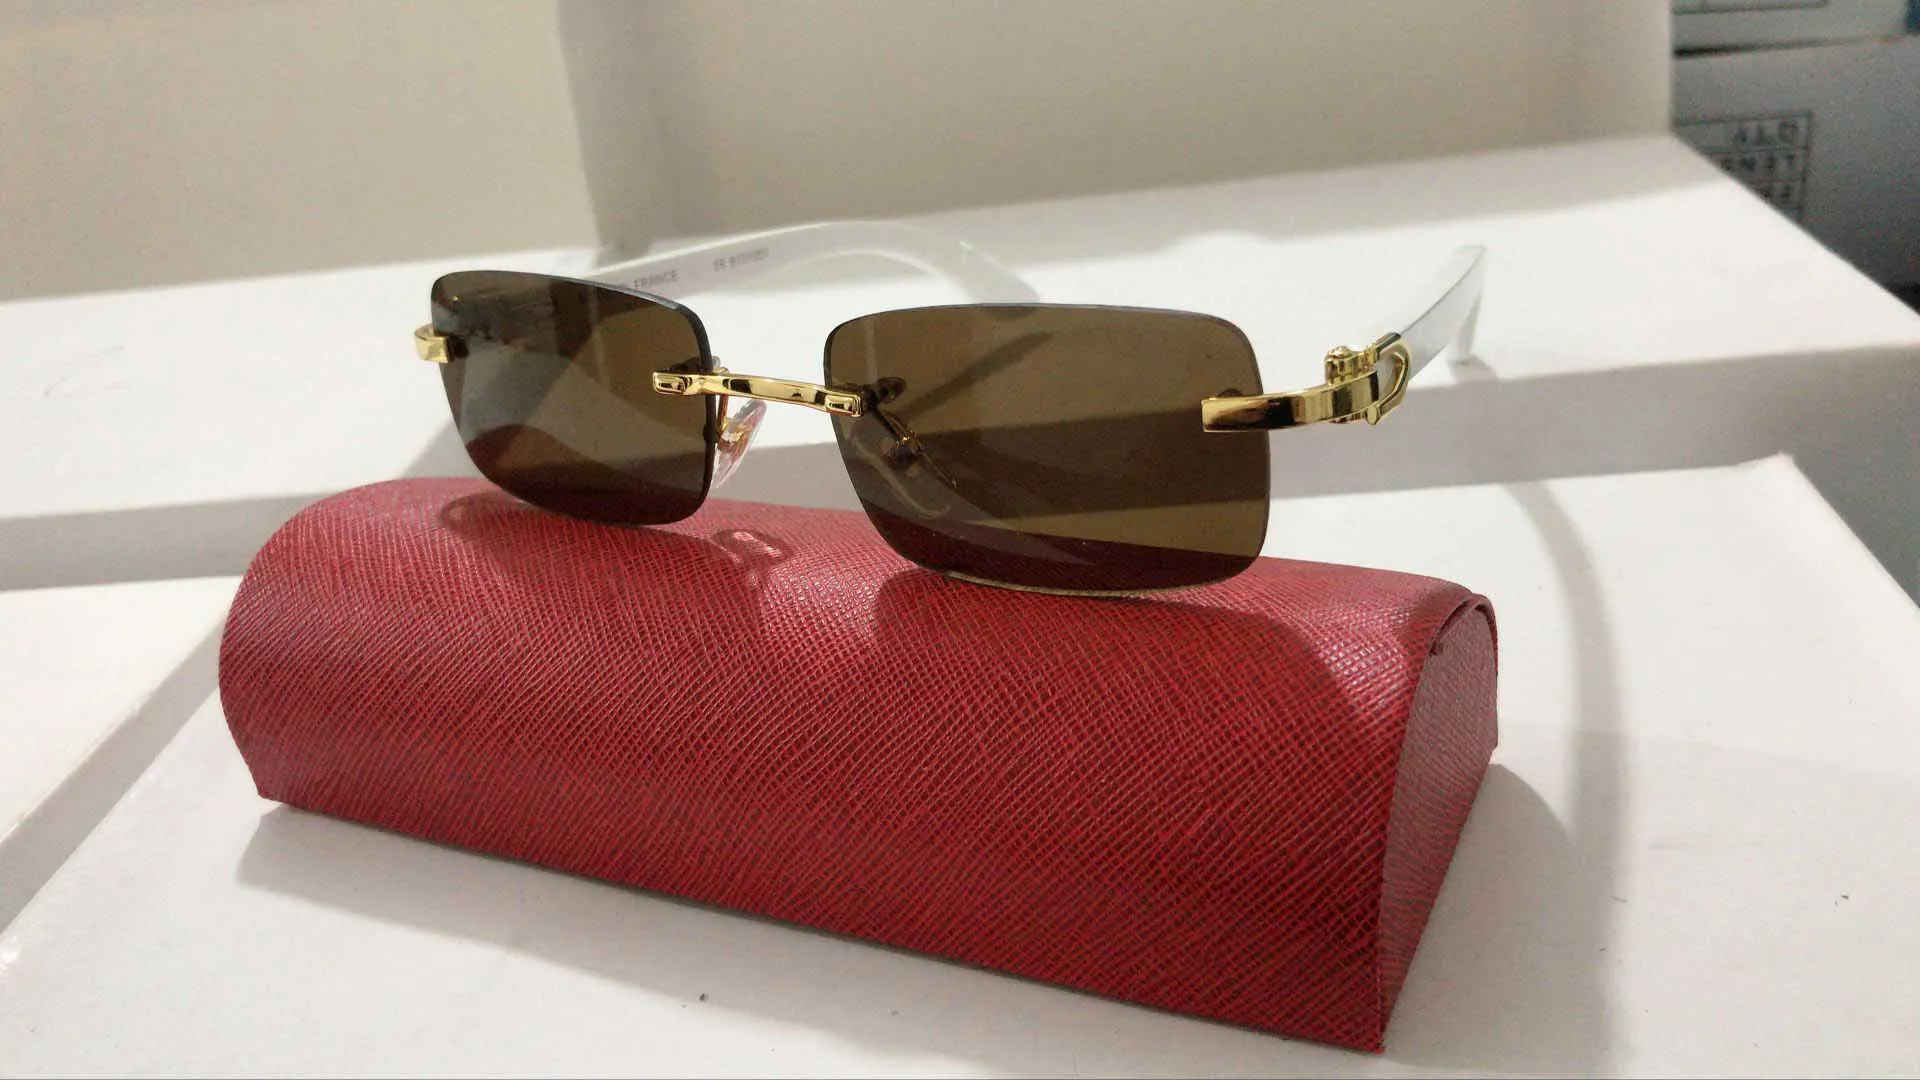 Totalmente nuevo FashMen Gafas de sol de diseñador Gafas sin montura Metal dorado Buffalo Hewear Lentes transparentes Pierna de madera occhiali lentes Lu289C